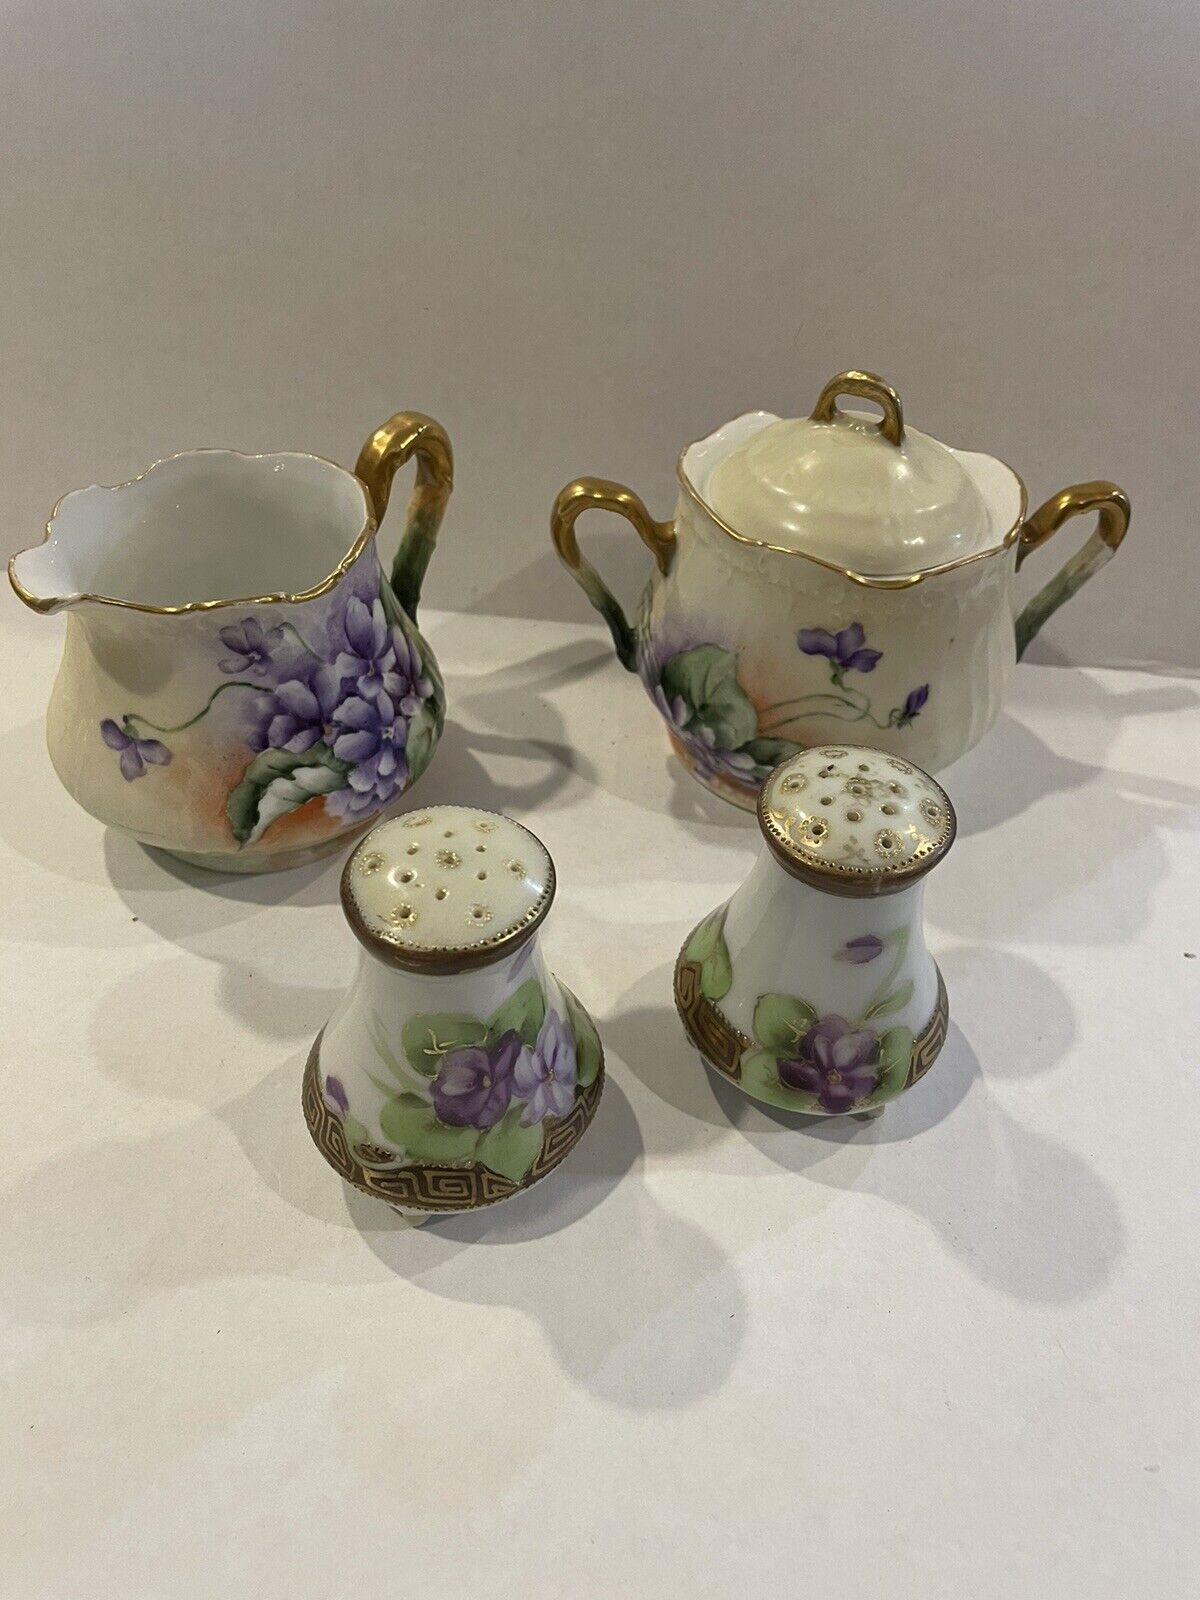 Vtg Hand-painted Violets Creamer, Sugar, Salt &Pepper Shakers Tea Set, Preowned